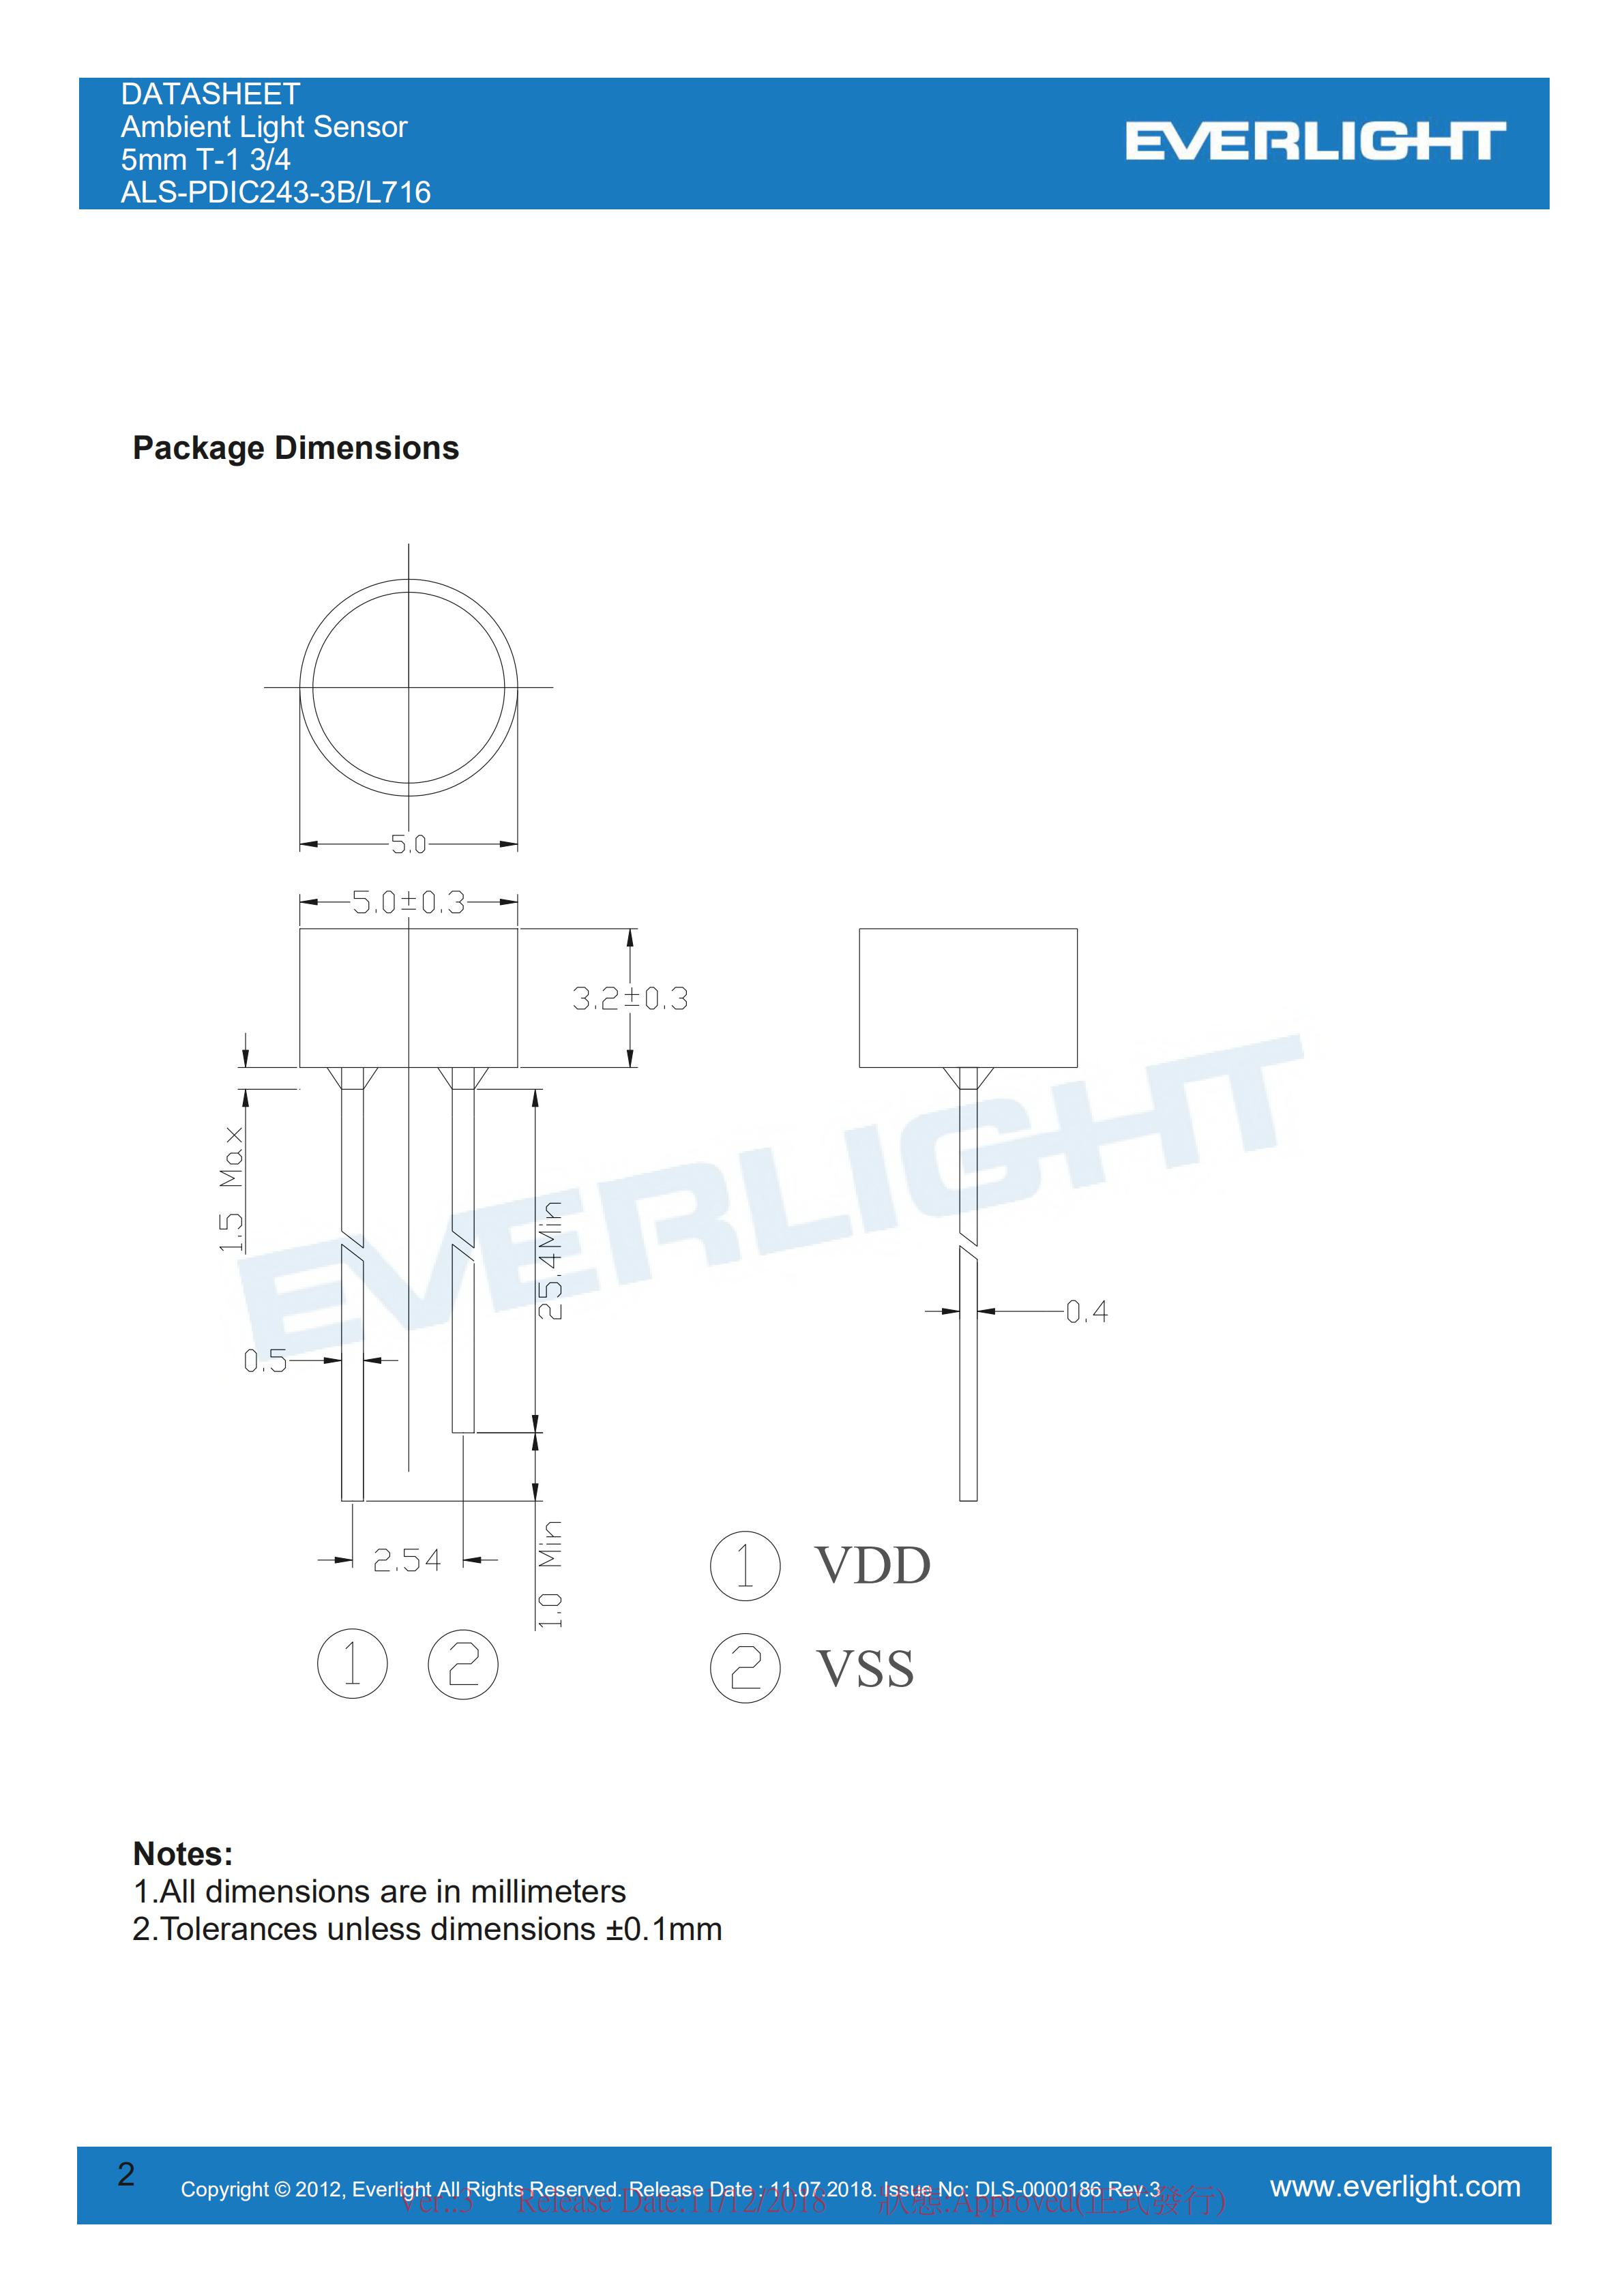 Everlight Ambient Light Sensor ALS-PDIC243-3B/L716 Datasheet